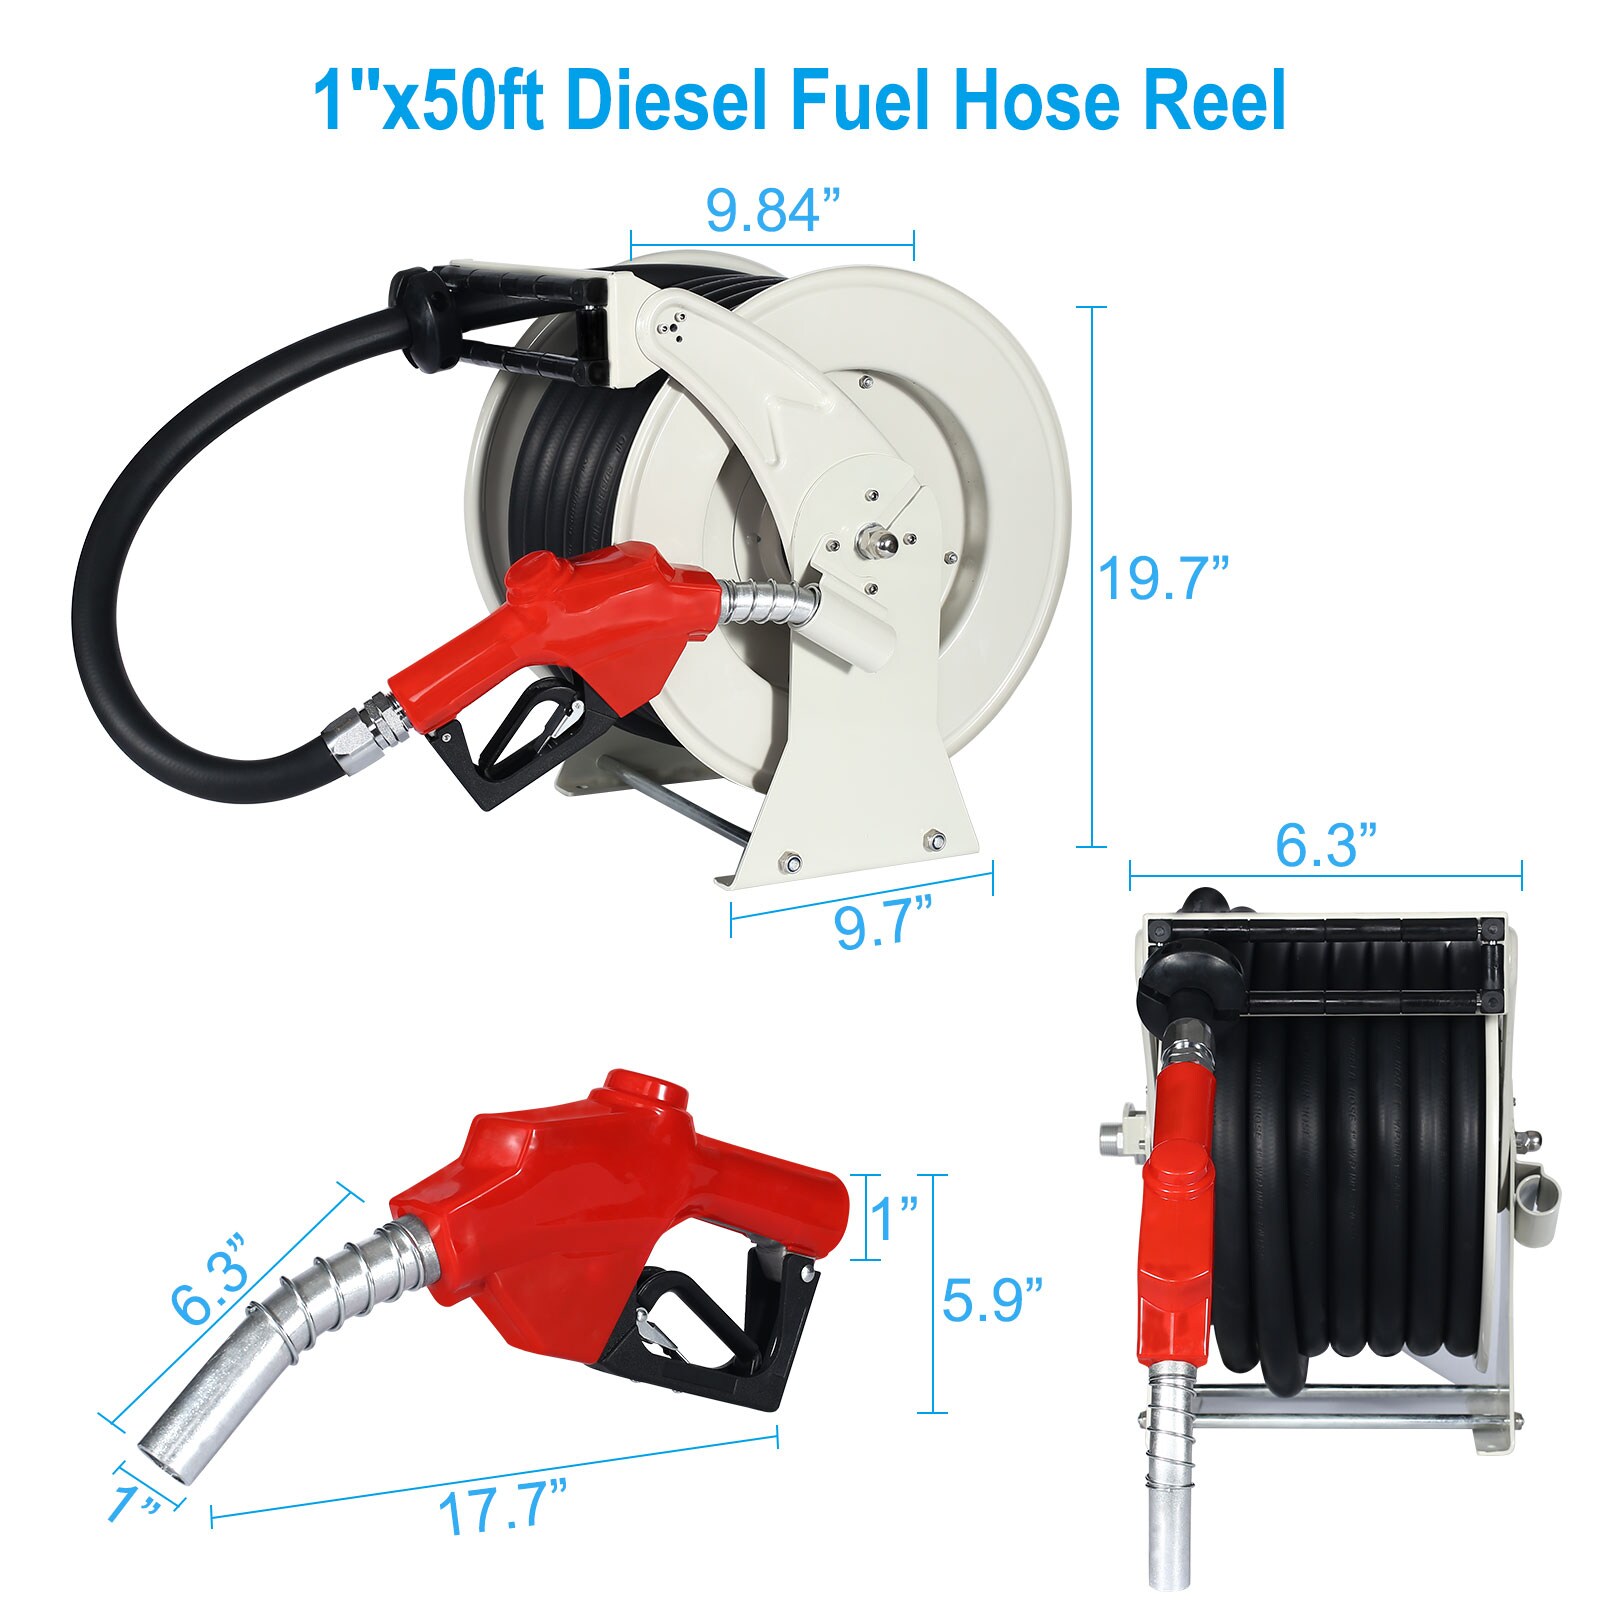 VEVOR Fuel Hose Reel, 1 x 50', Extra Long Retractable Diesel Hose Reel,  Heavy-Duty Carbon